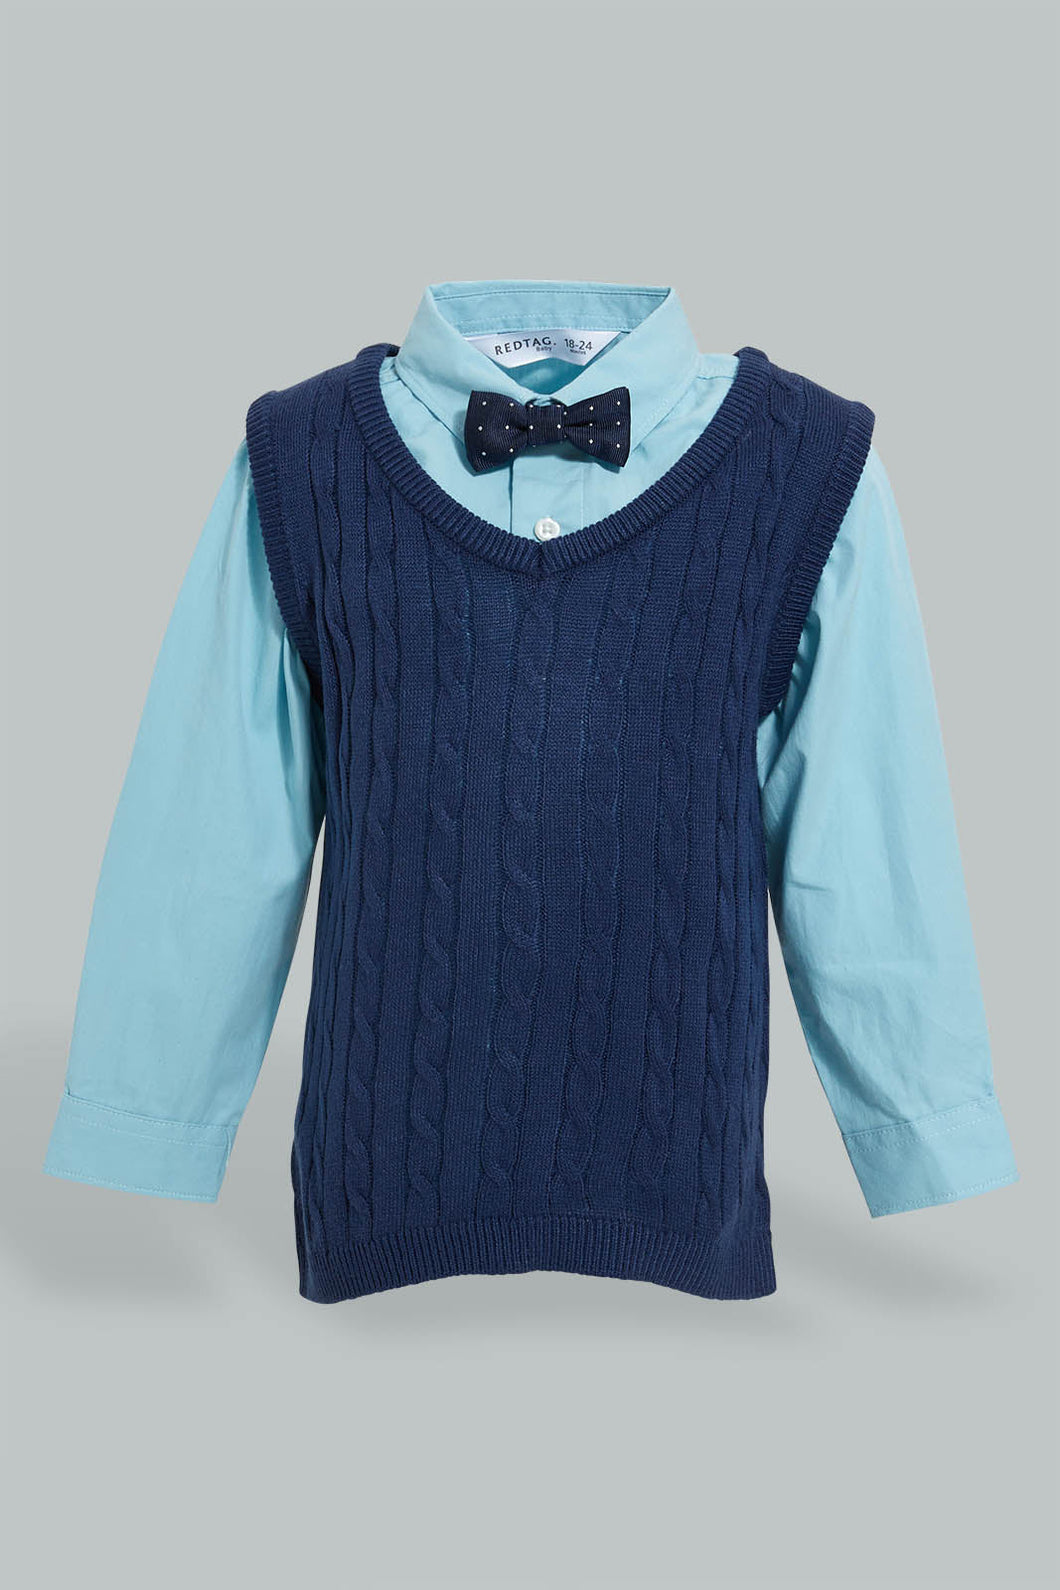 Navy Pullover With Shirt Set (3 piece) طقم قميص أزرق وبلوفر كحلي مع ربطة عنق